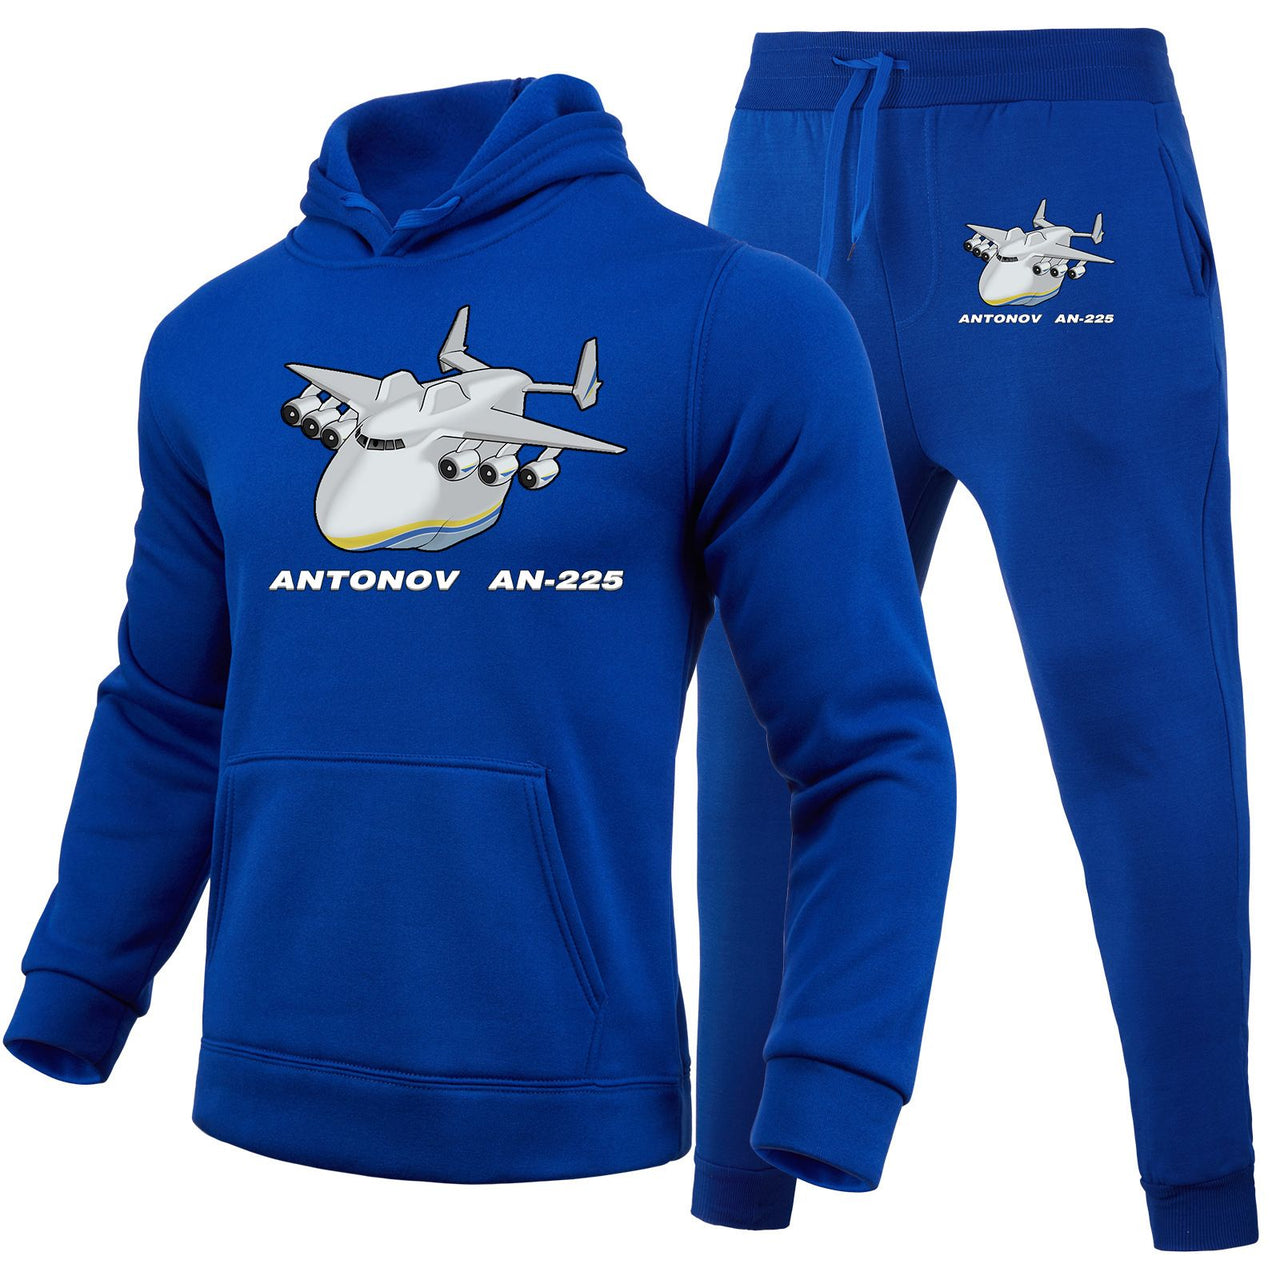 Antonov AN-225 (29) Designed Hoodies & Sweatpants Set